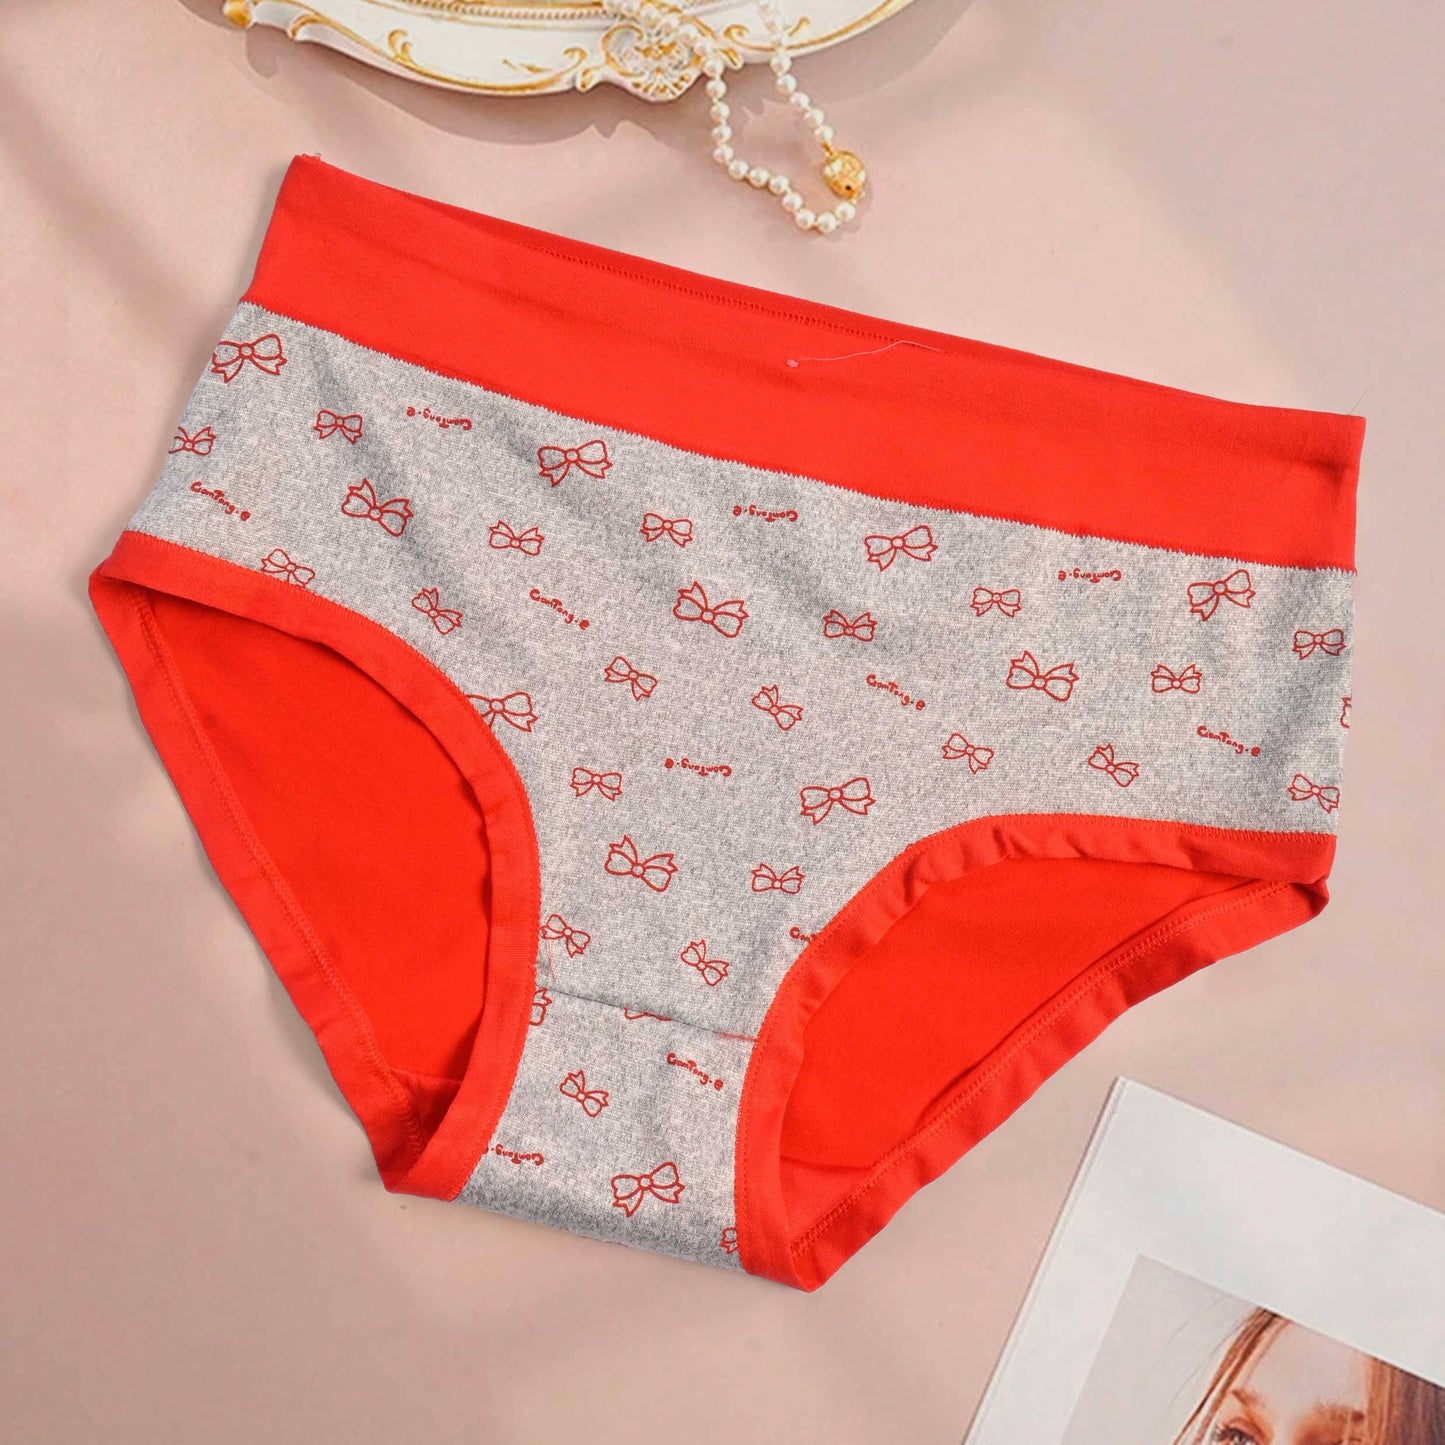 Misa Women's Classic Bow Knot Printed Underwear Women's Lingerie SRL Red 30-36 